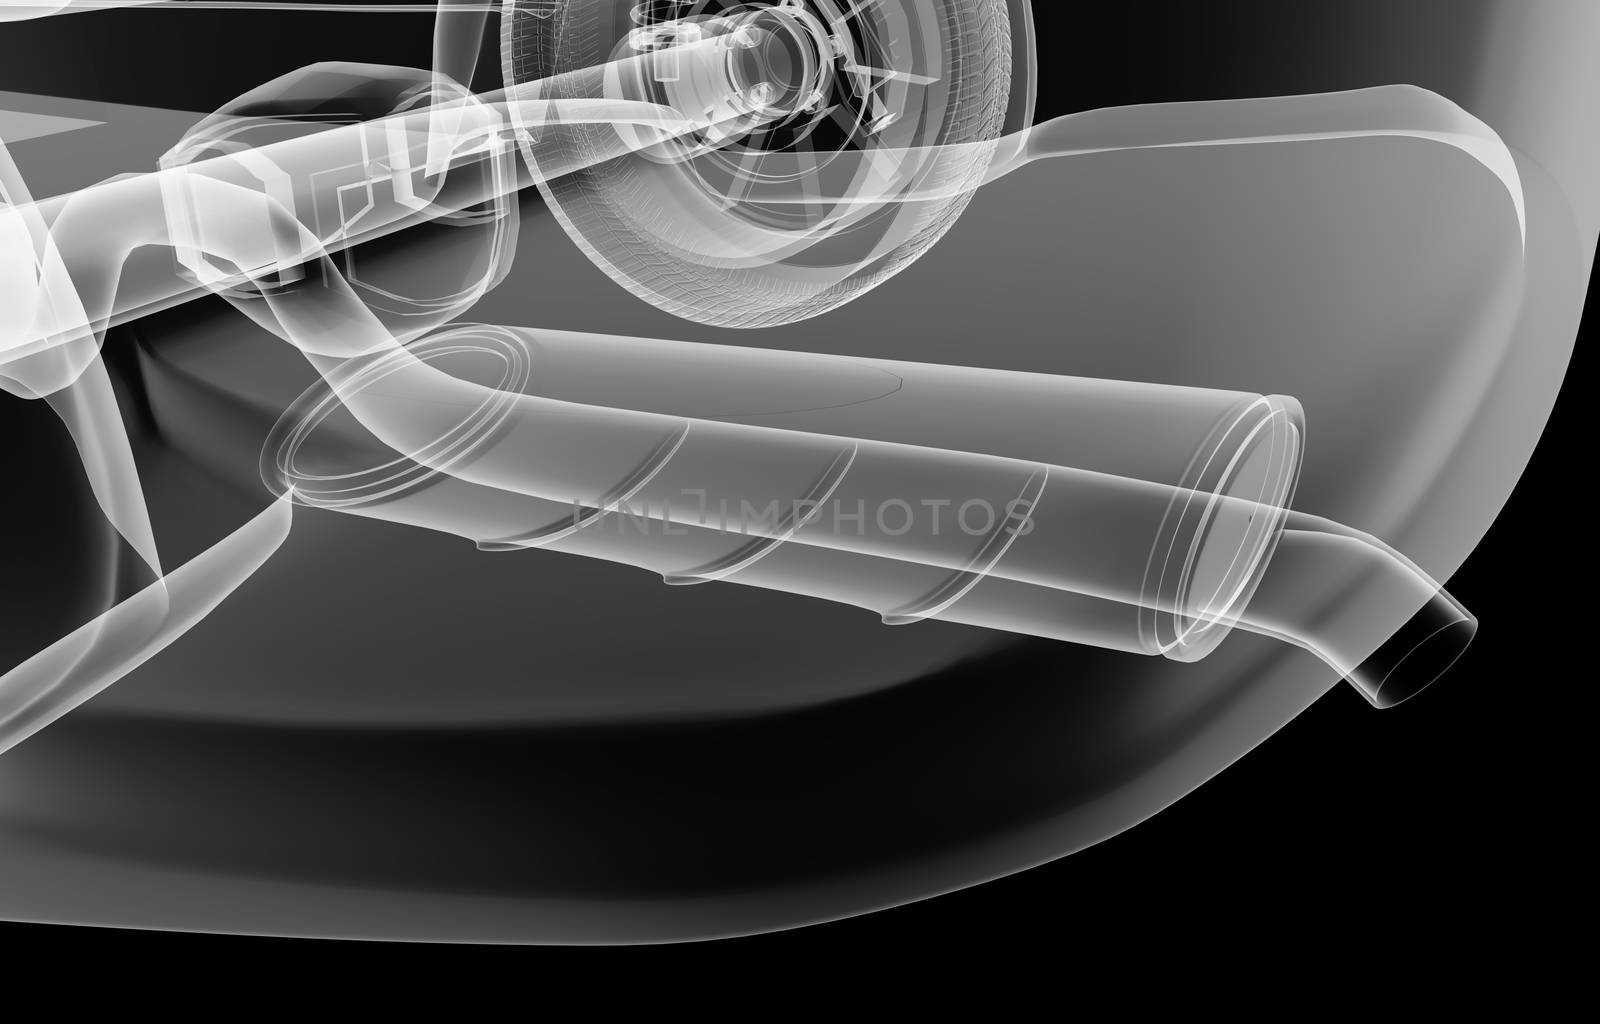 X-ray rear suspension car on black background, 3d illustration